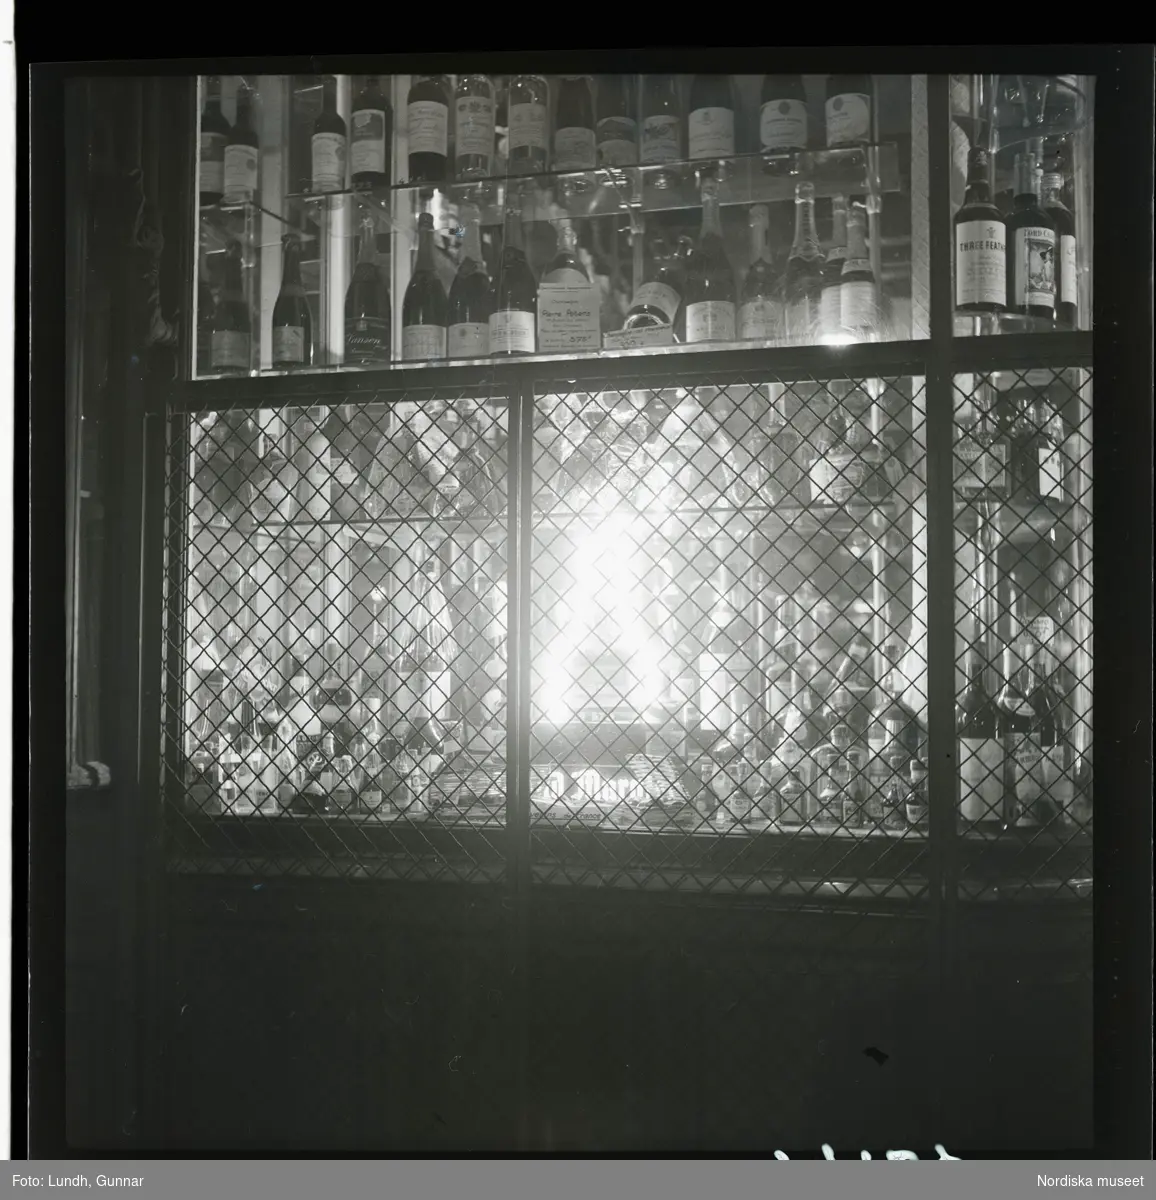 1950. Paris. Spritflaskor i fönster